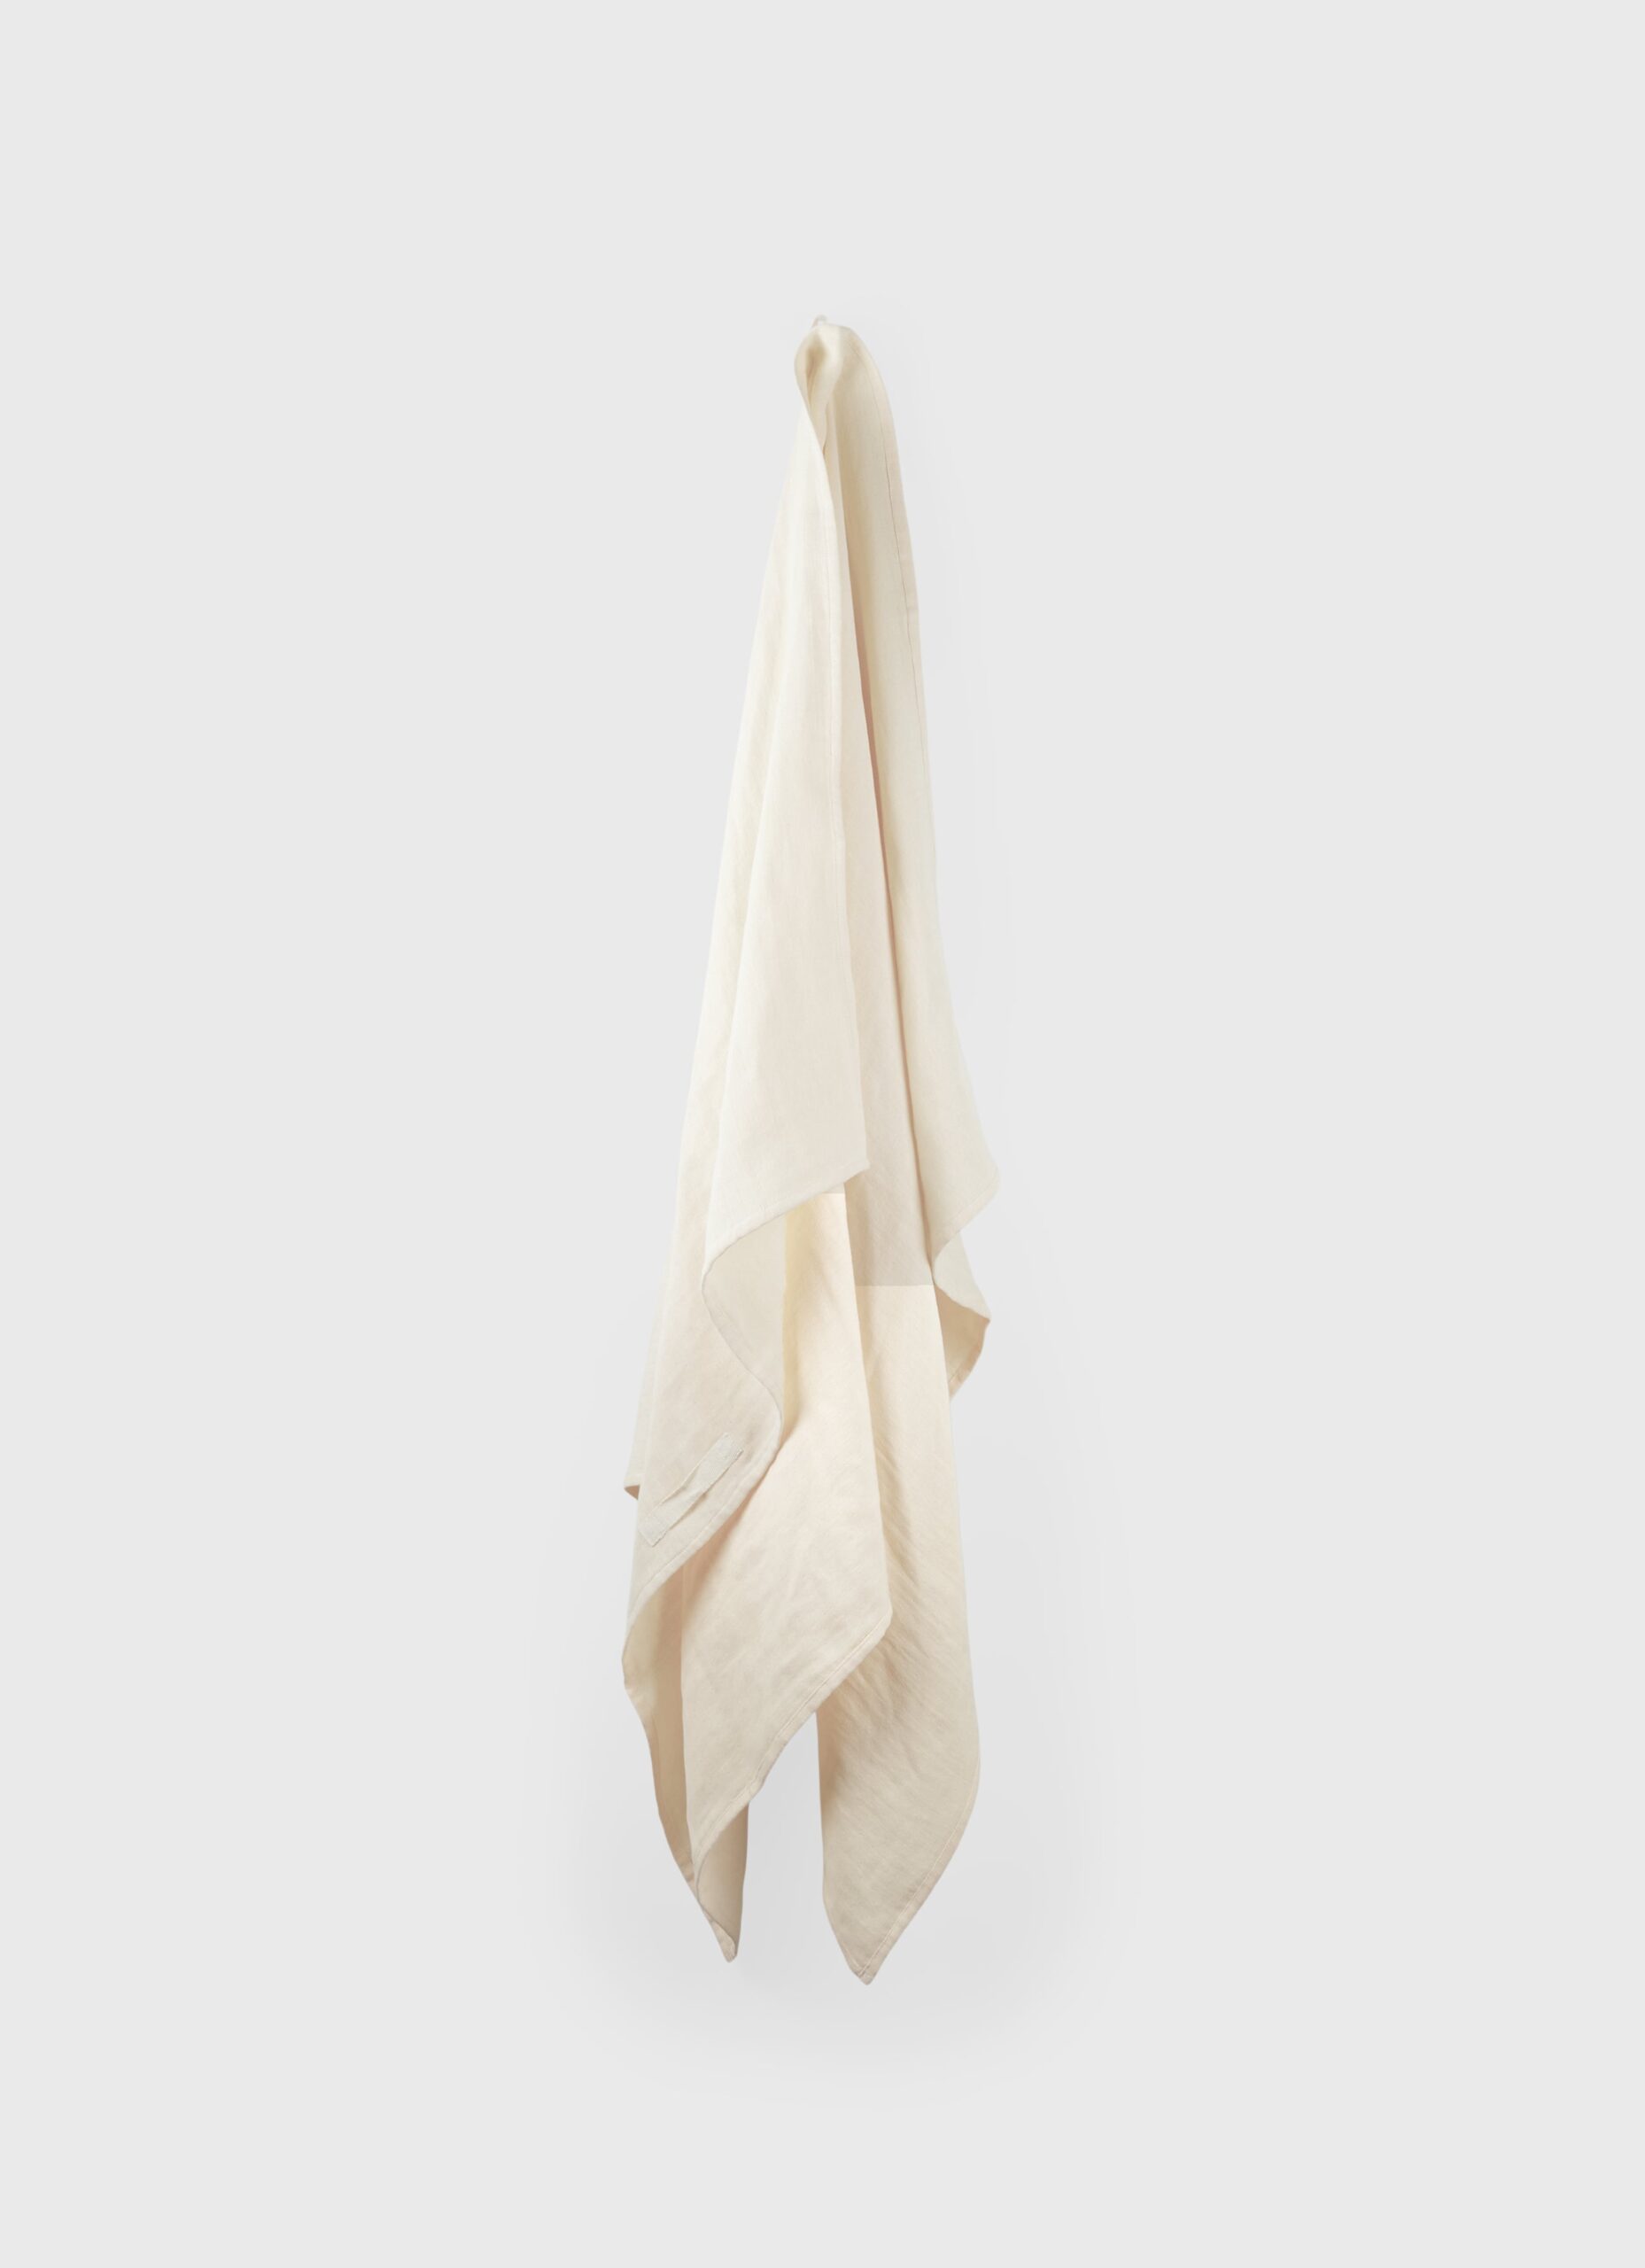 Frama - Light Towel - Bone White - Bath Sheet